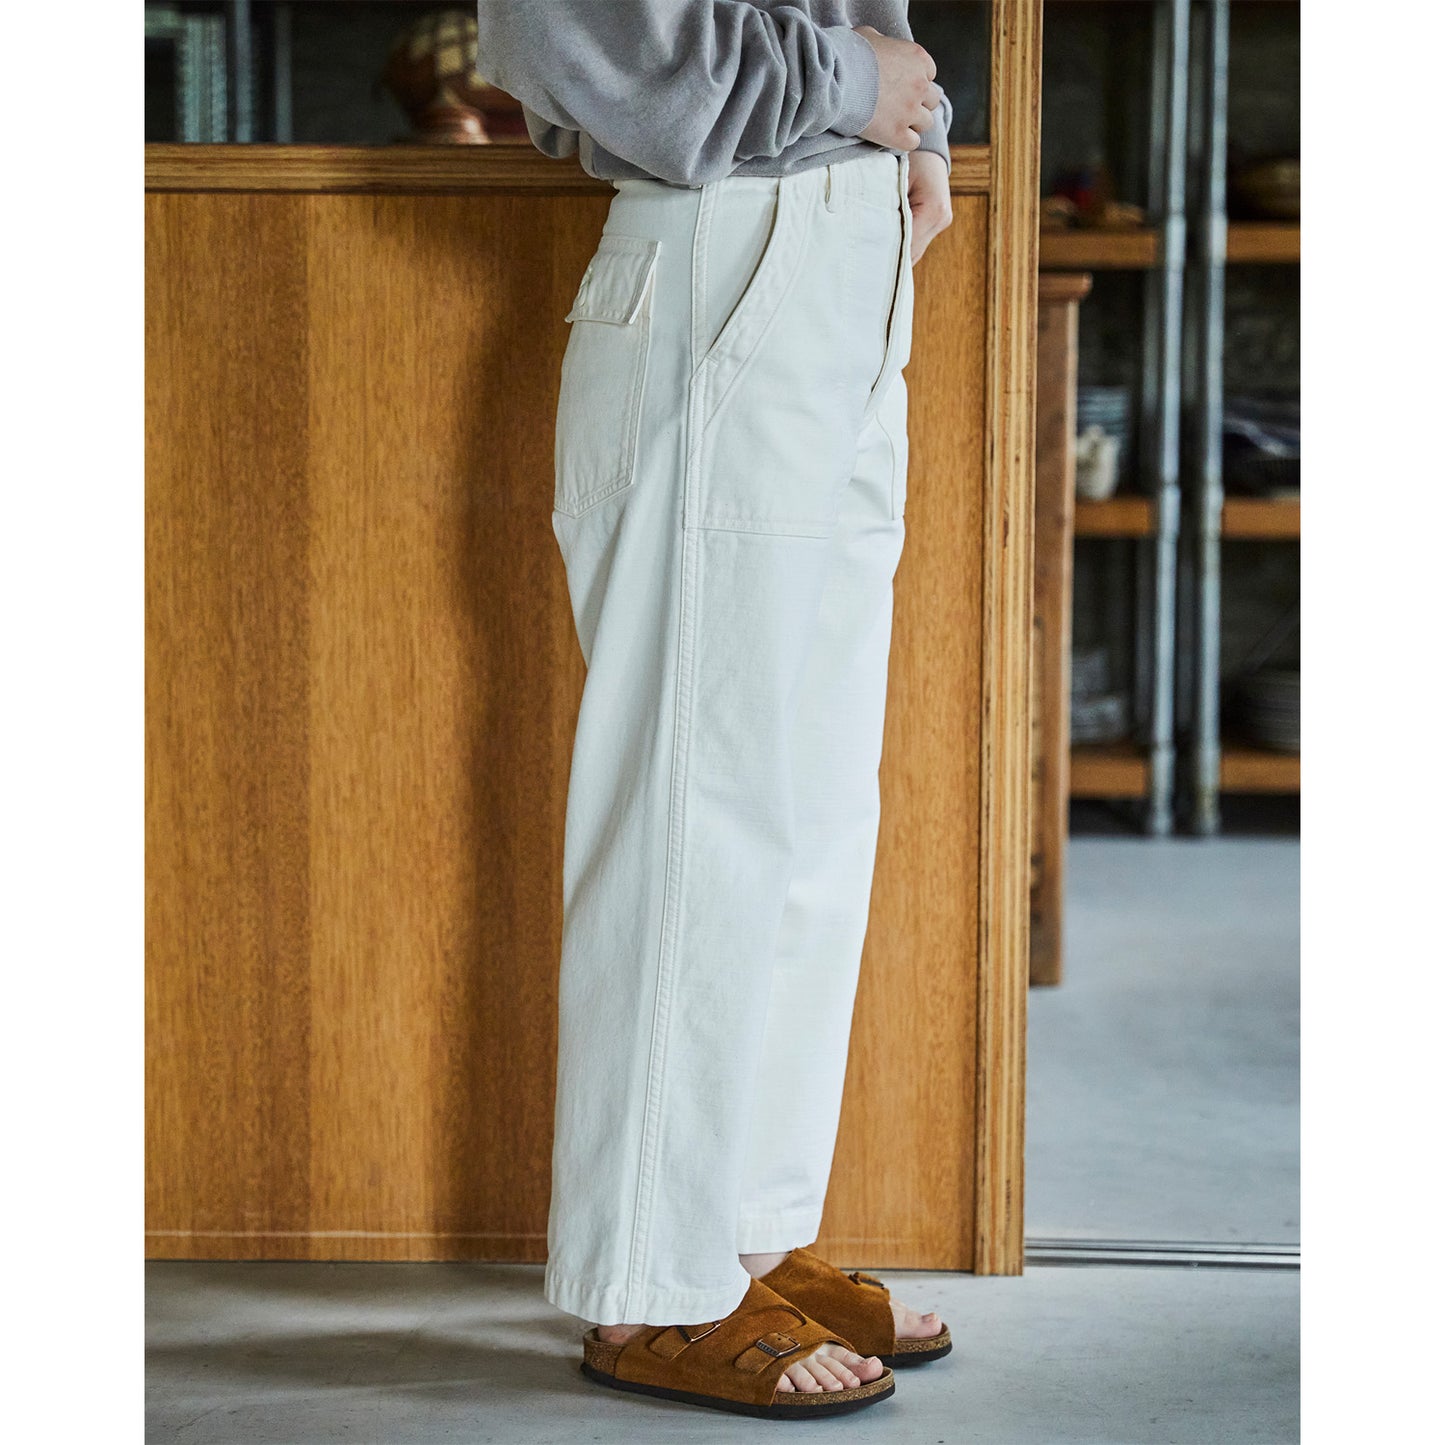 Women's Short Length US Army Fatigue Pants, Ecru